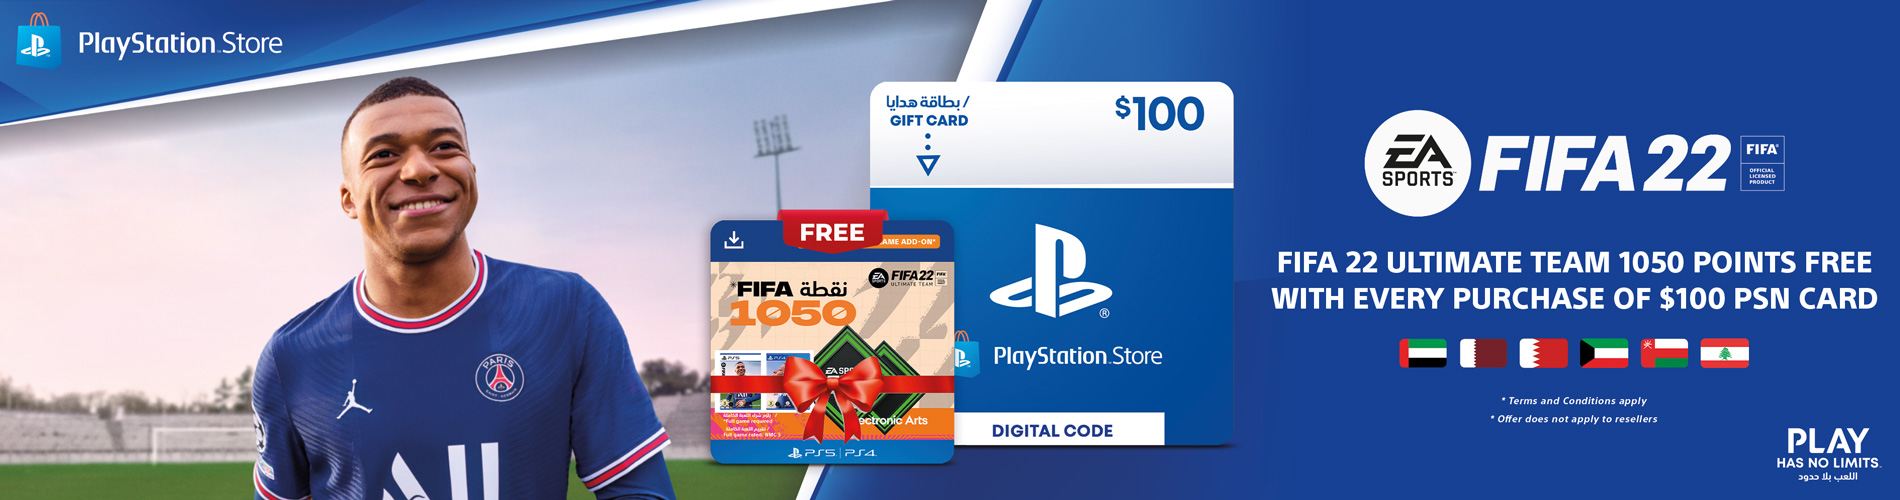 PSN $100 with FREE FIFA 22 -1050 FUT